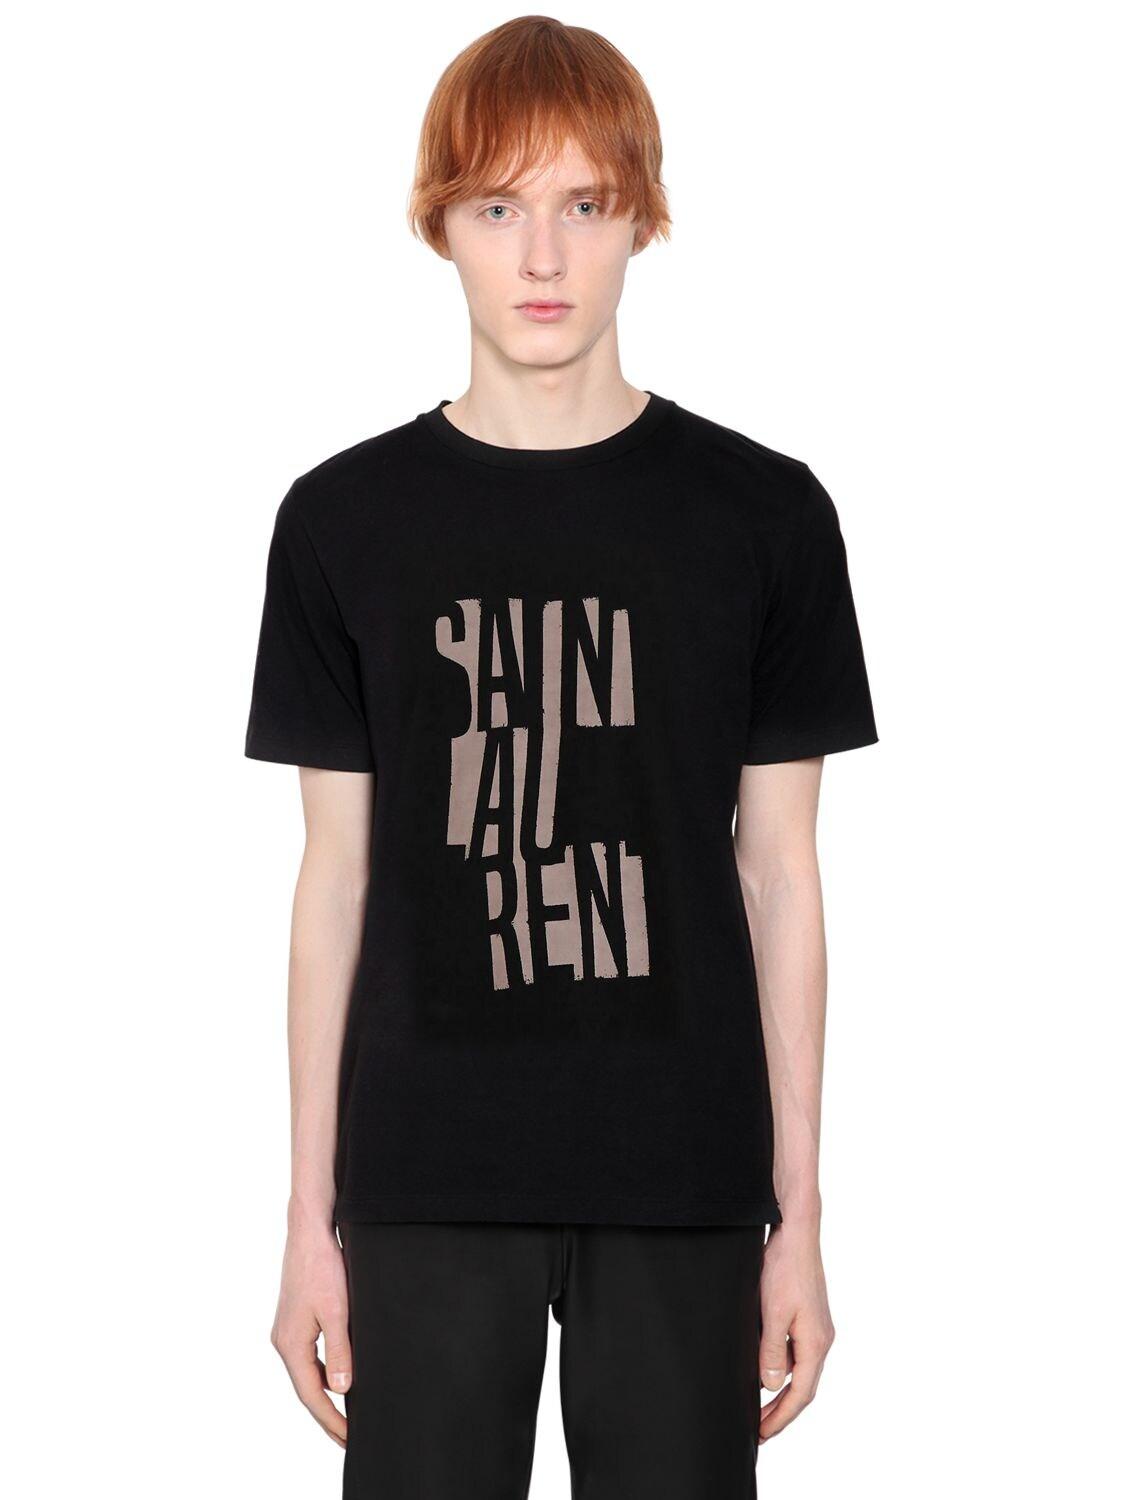 Saint Laurent Logo Printed Cotton Jersey T-shirt in Black for Men - Lyst